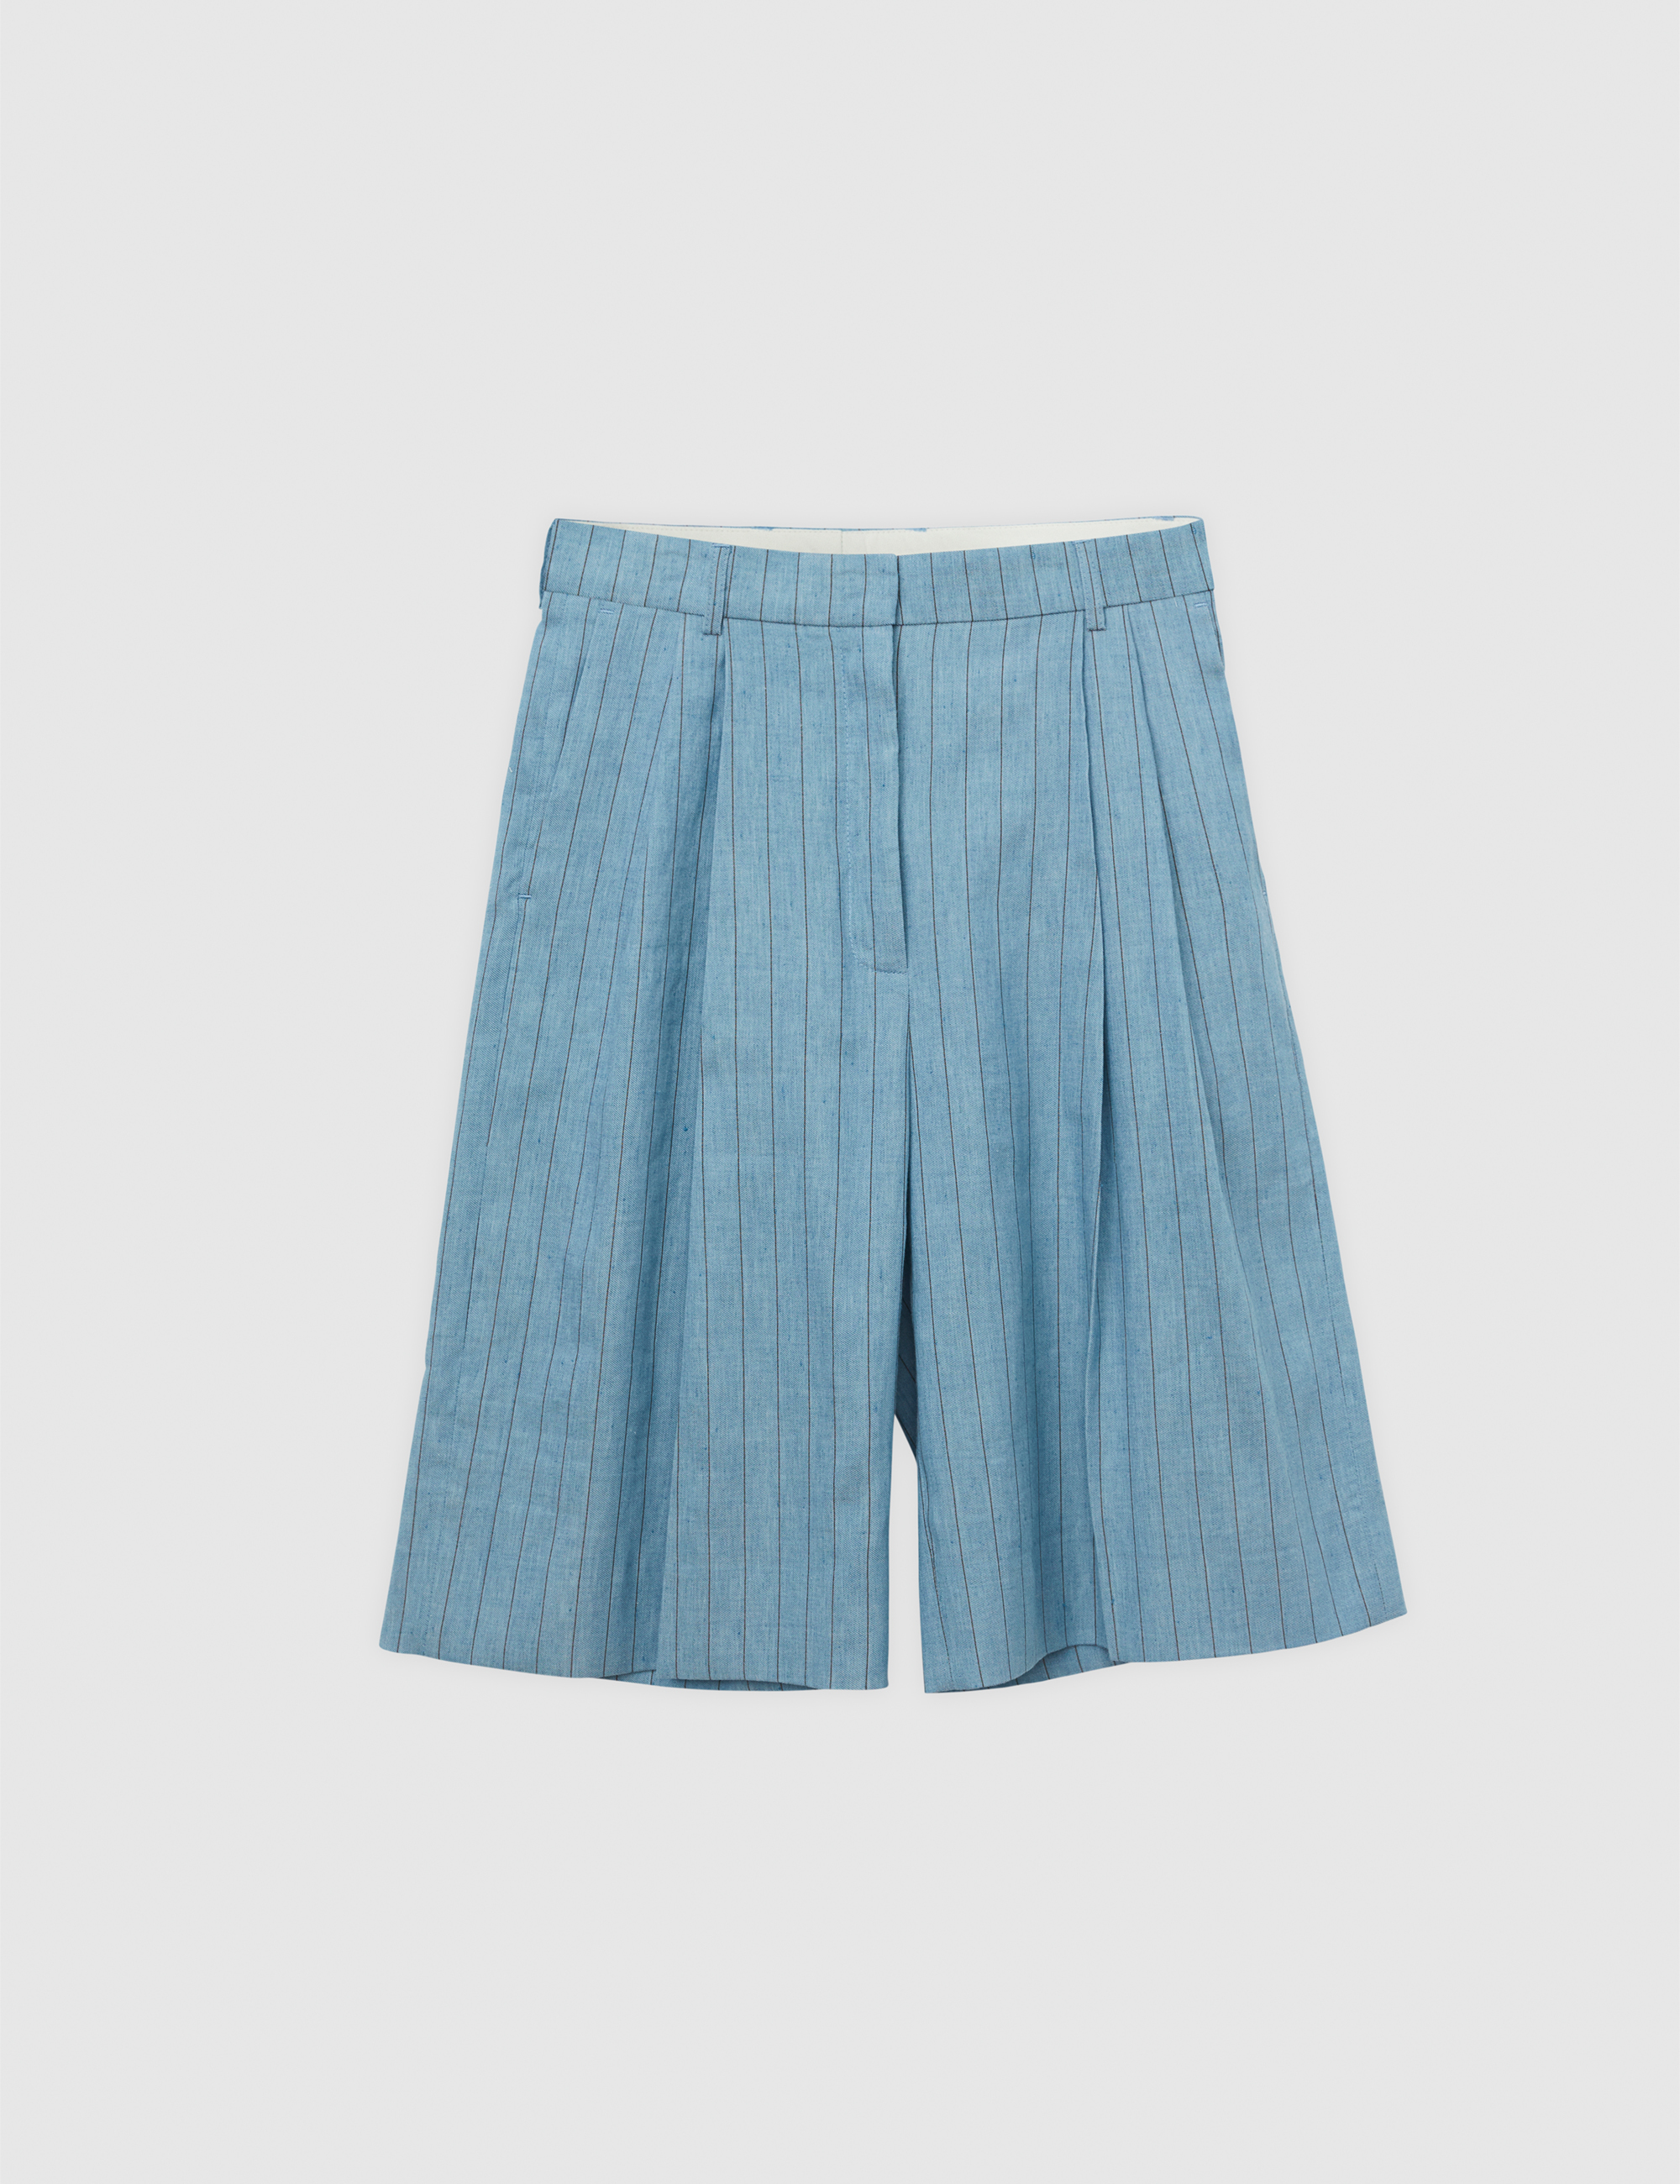  Gordon Summer Pinstripe Shorts